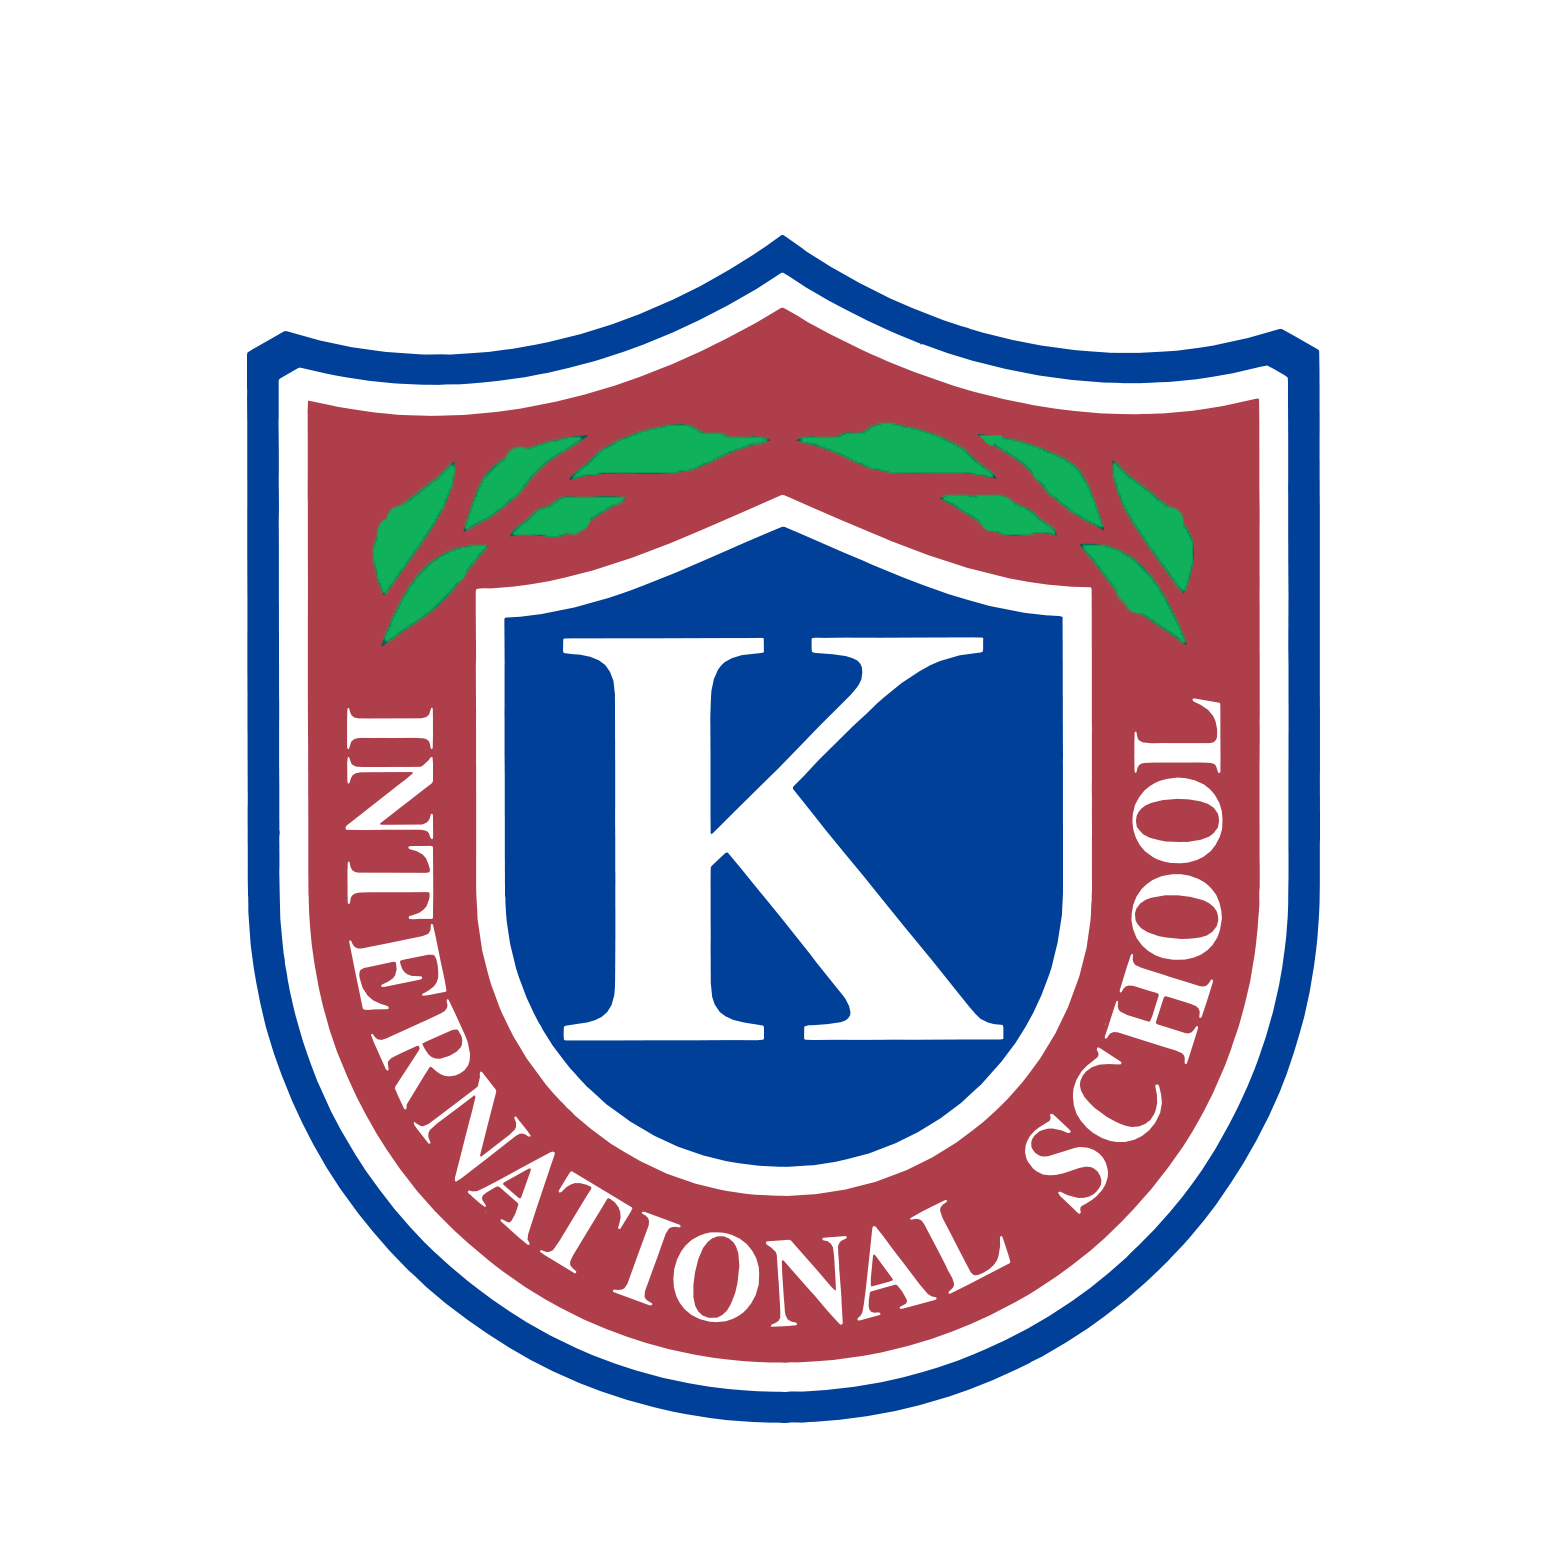 K. International School Tokyo logo